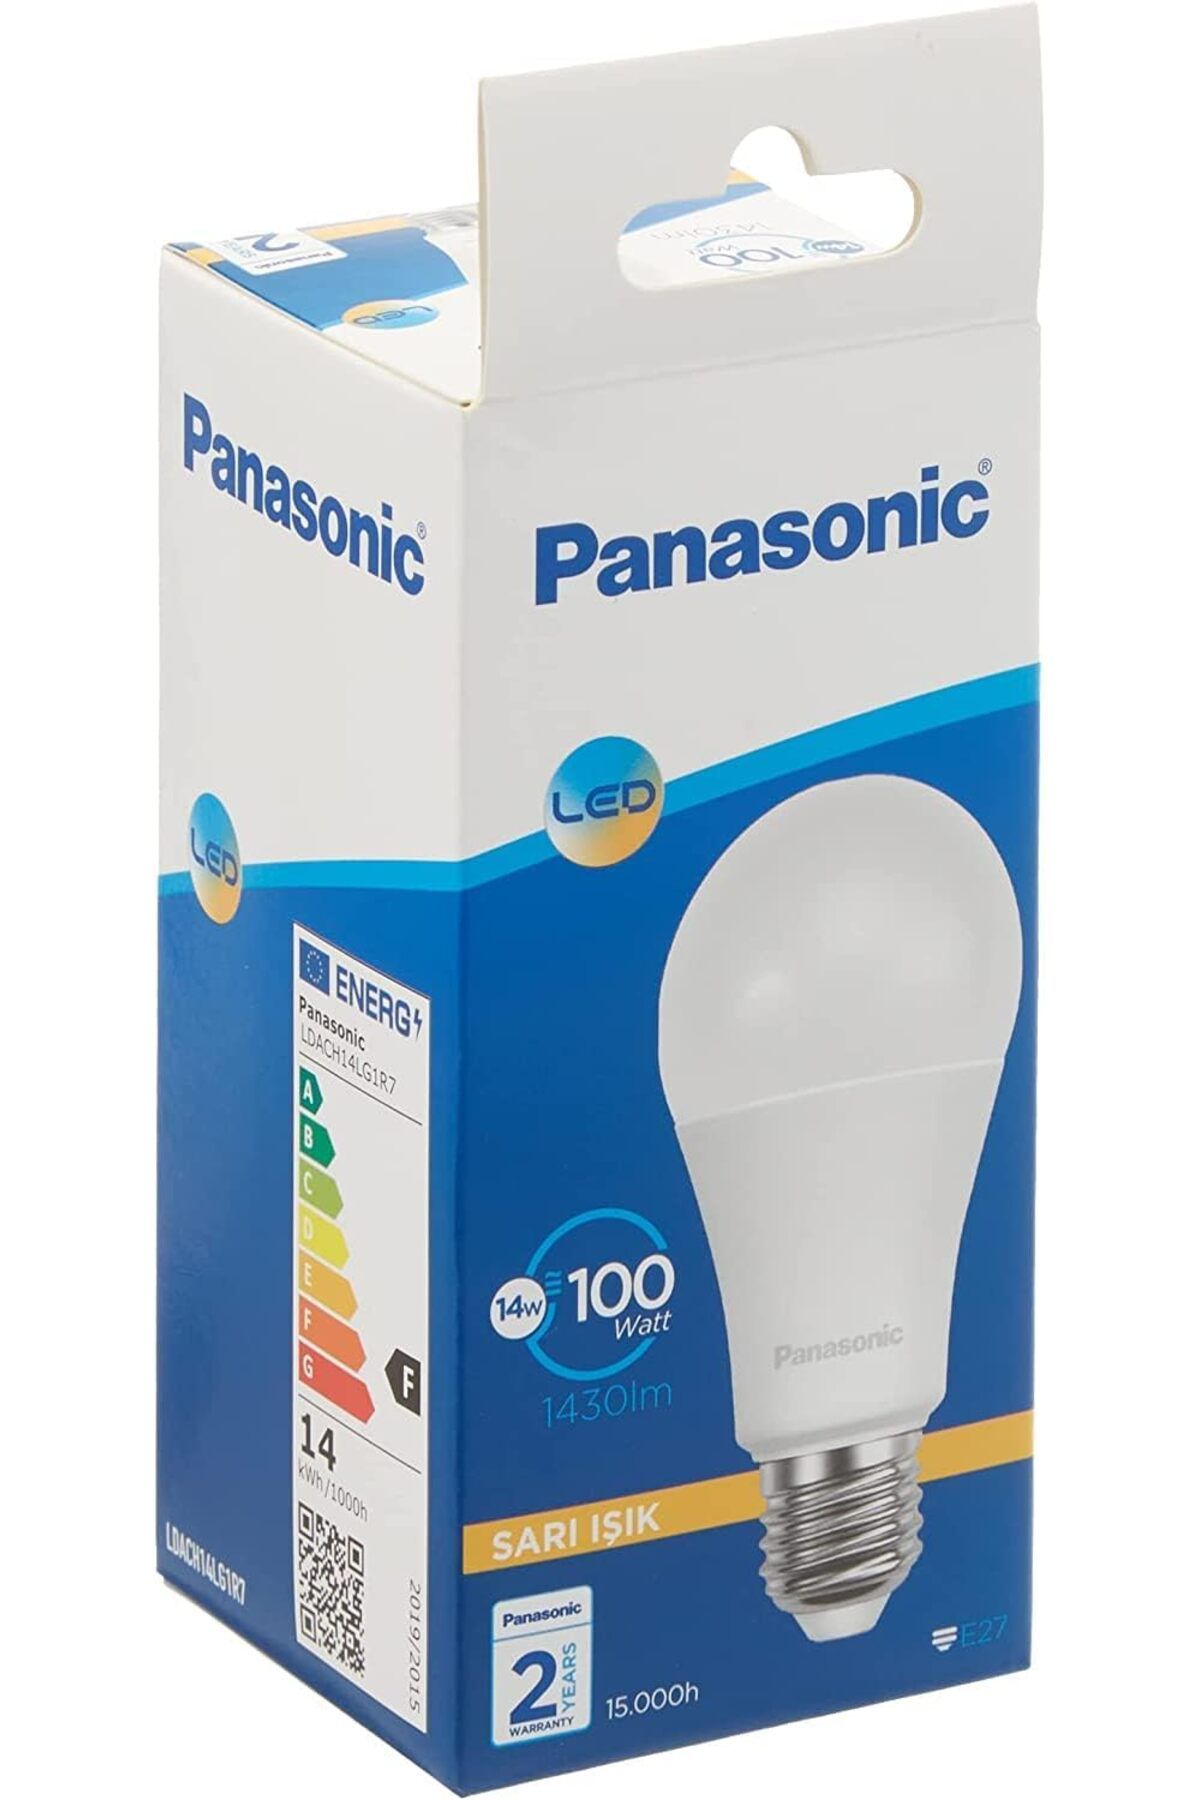 Panasonic 14W 2700K Sarı Işık Led Ampul 2 li Paket